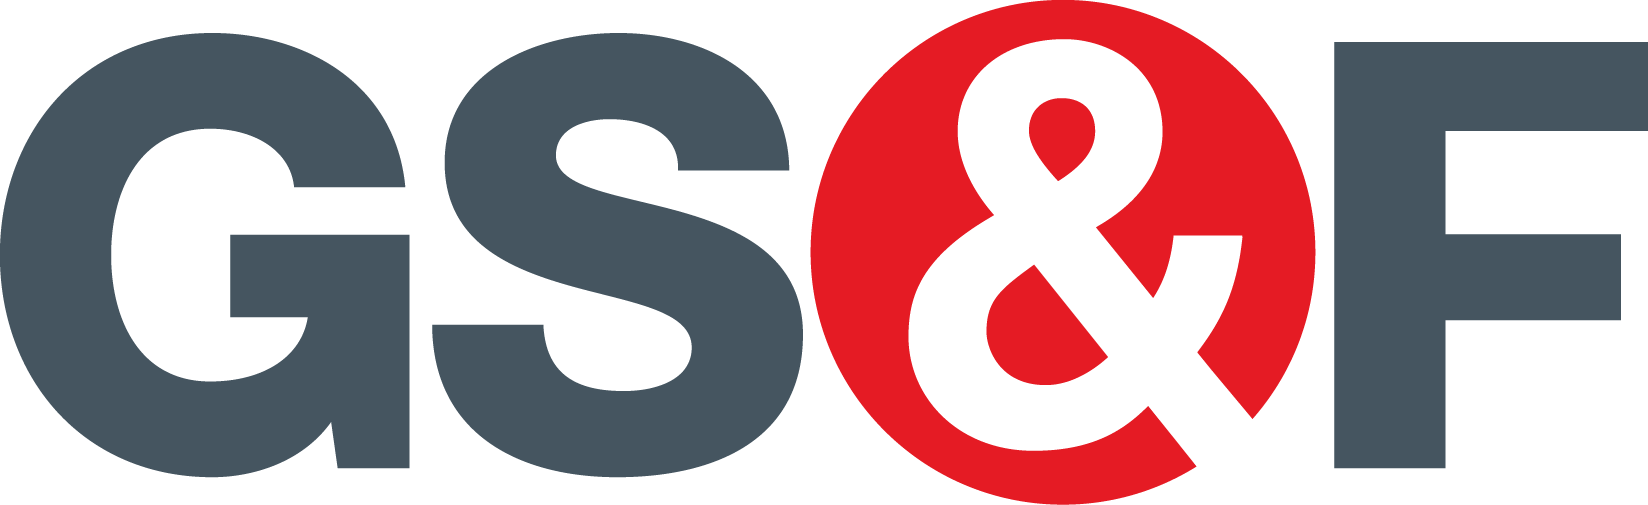 GS&F logo